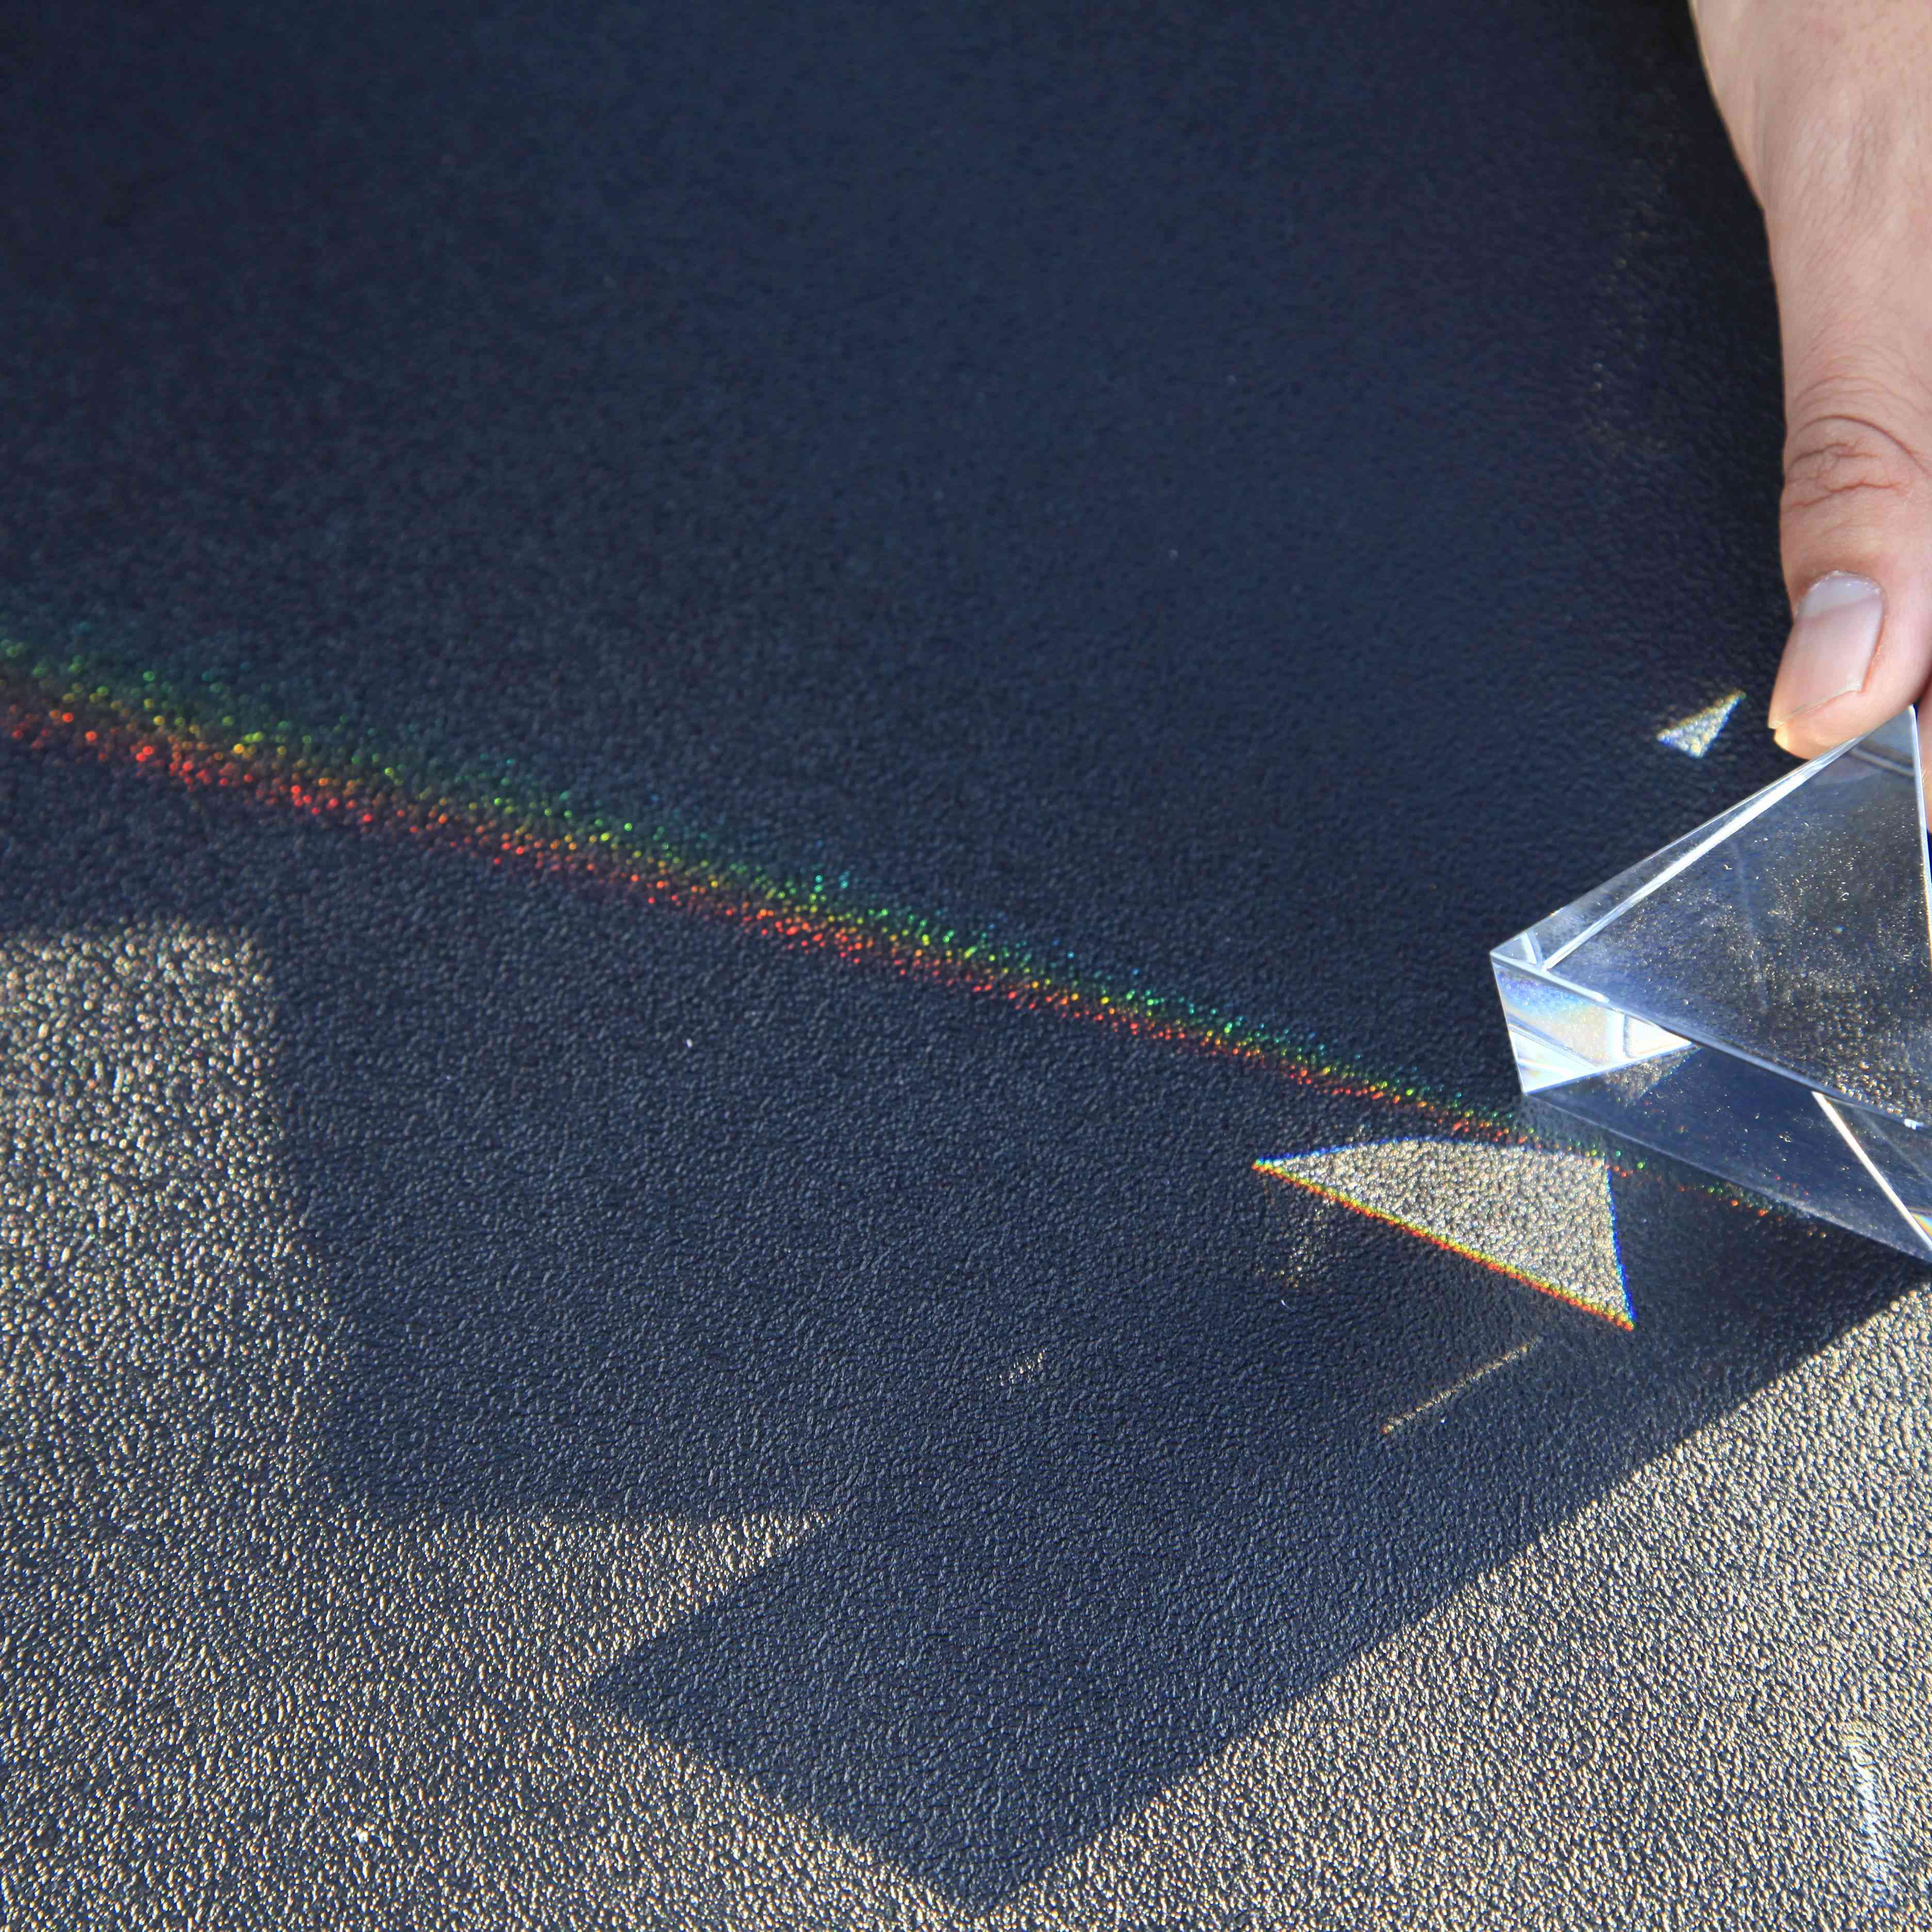 Transparent Rainbow Polyhedral Pyramid Prism